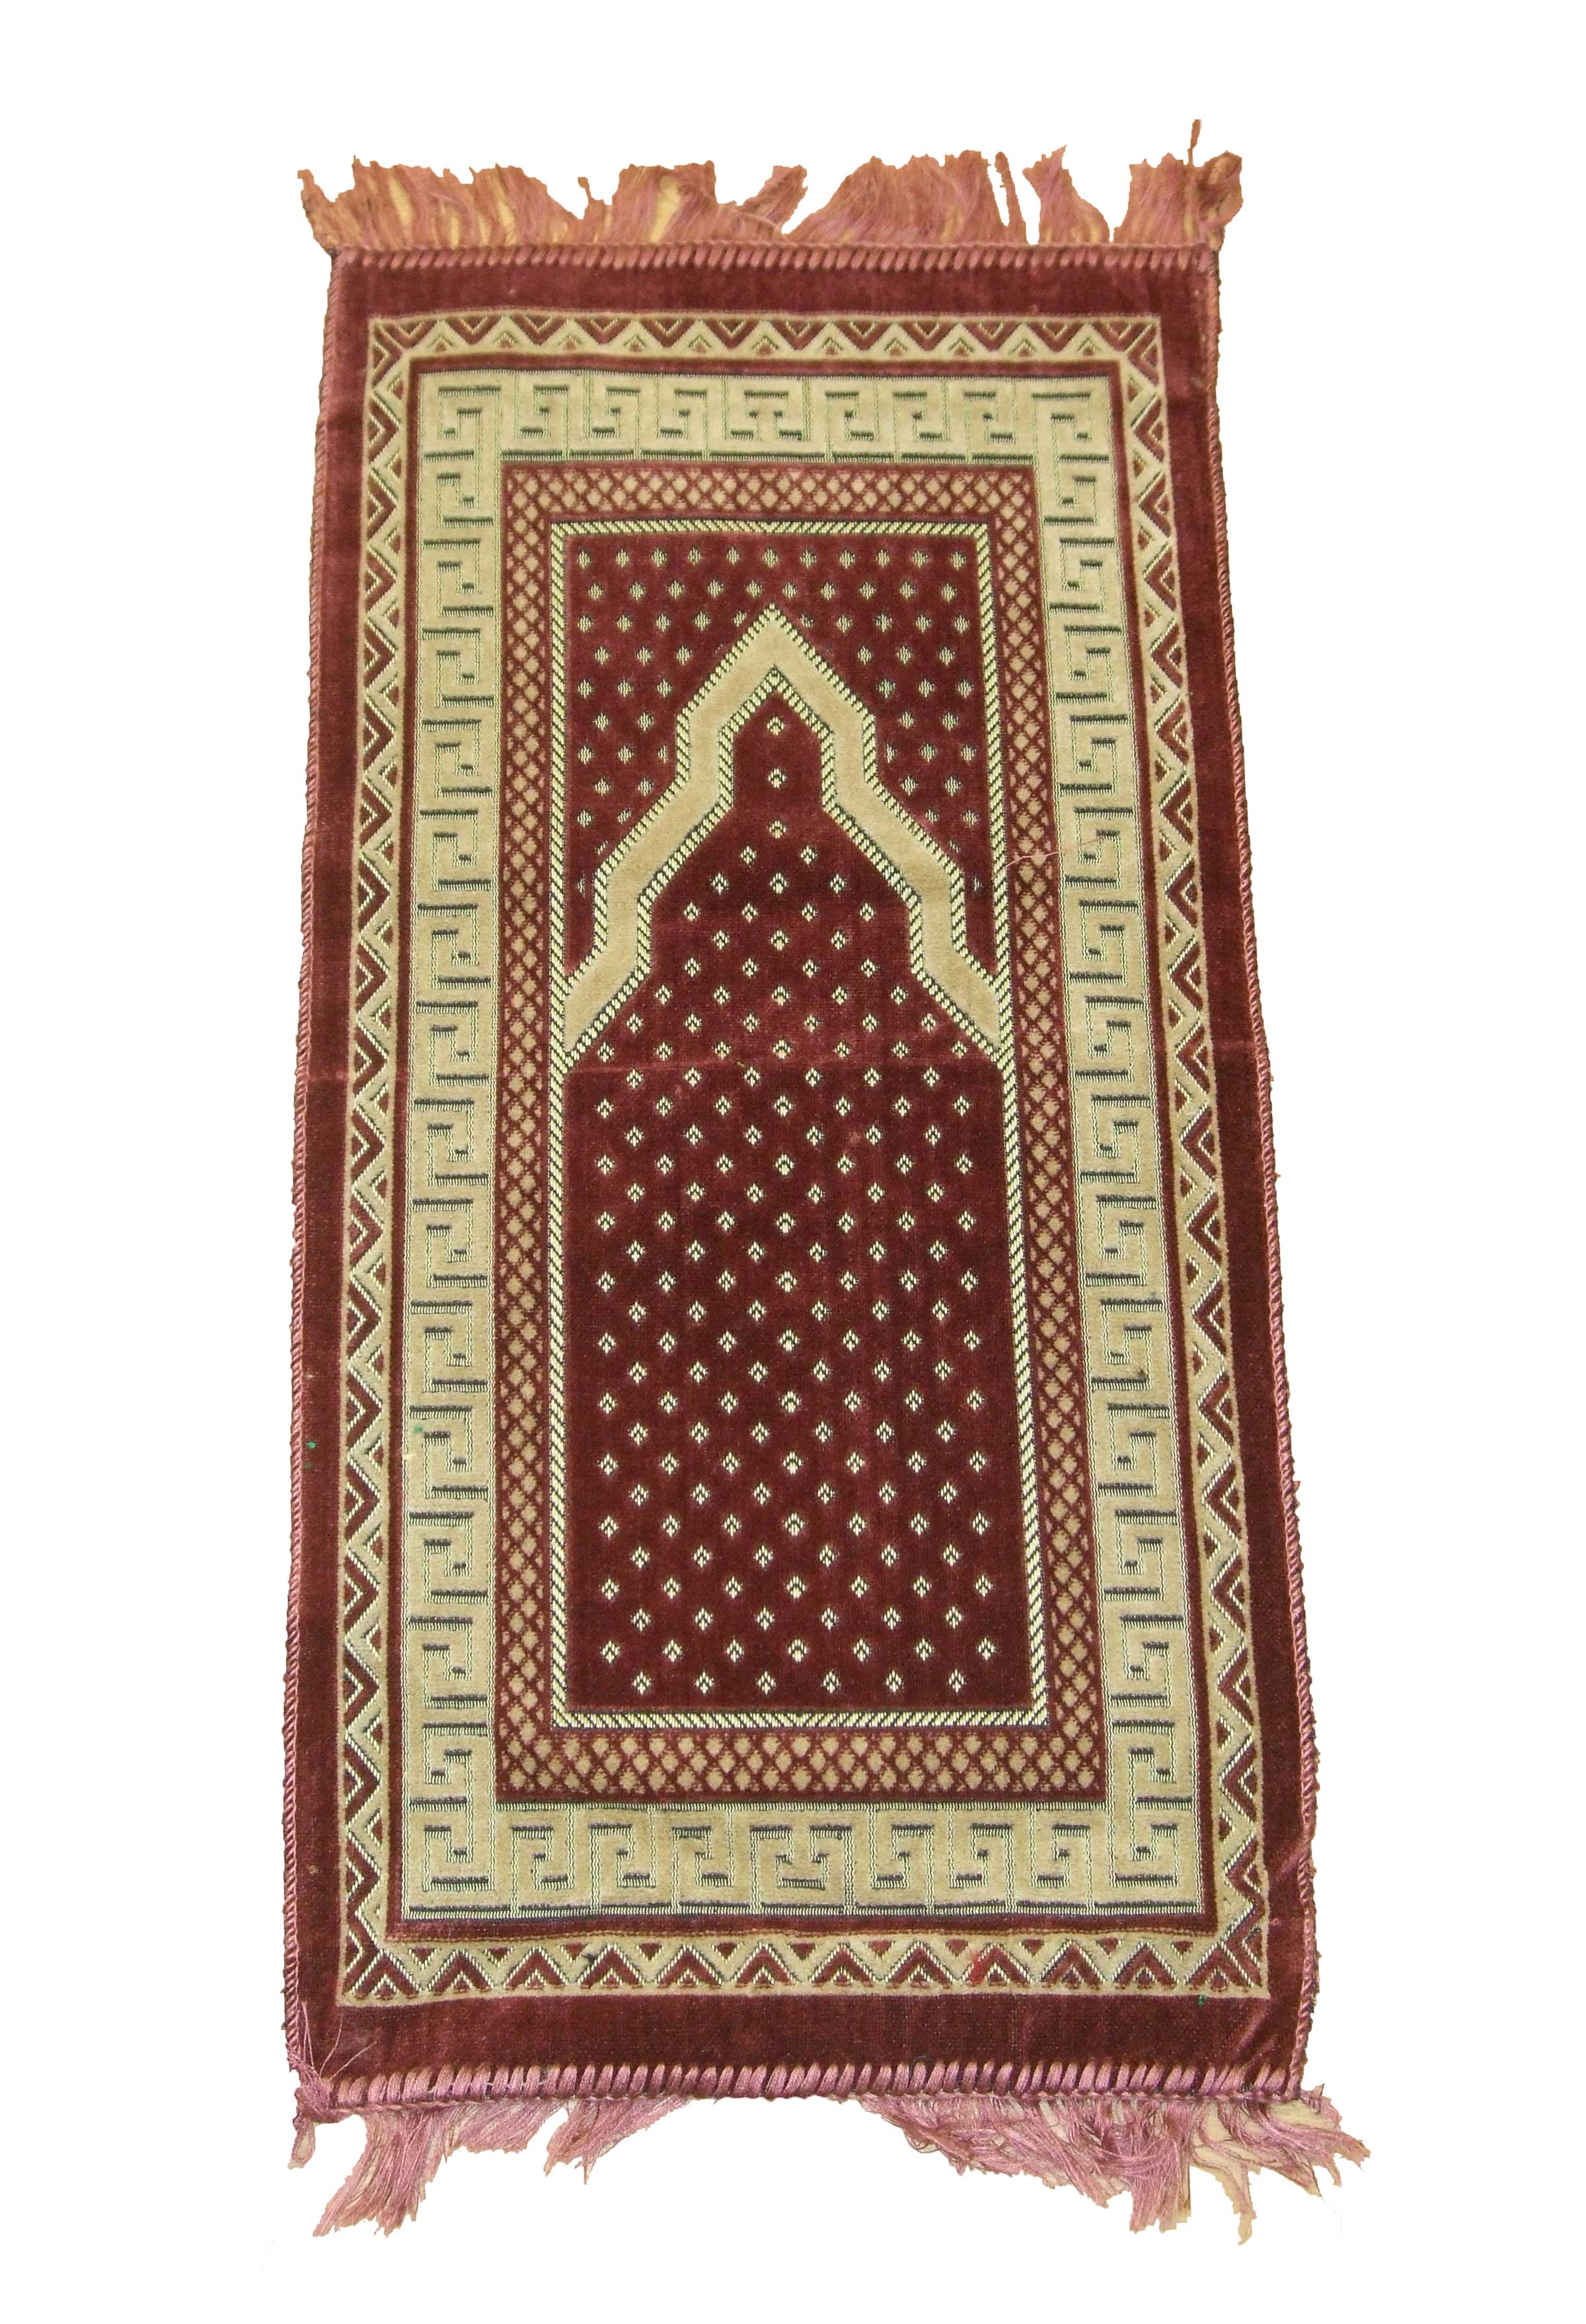 Luxury Padded Prayer mat made